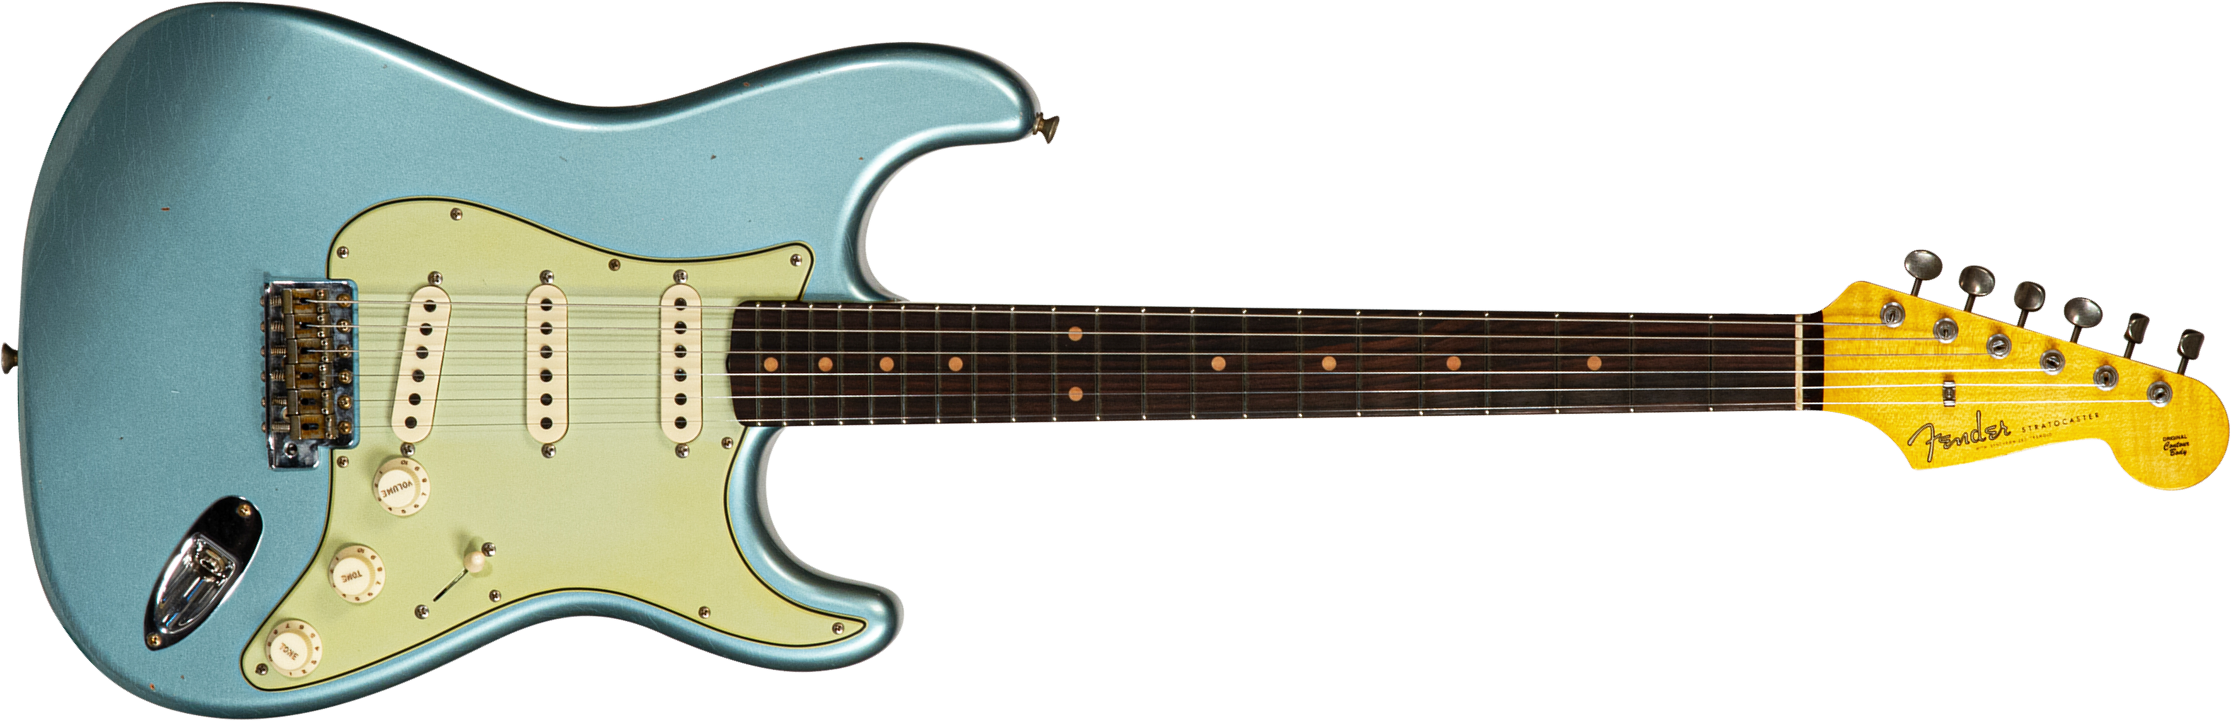 Fender Custom Shop Strat 1959 3s Trem Rw #cz566857 - Journeyman Relic Teal Green Metallic - Str shape electric guitar - Main picture